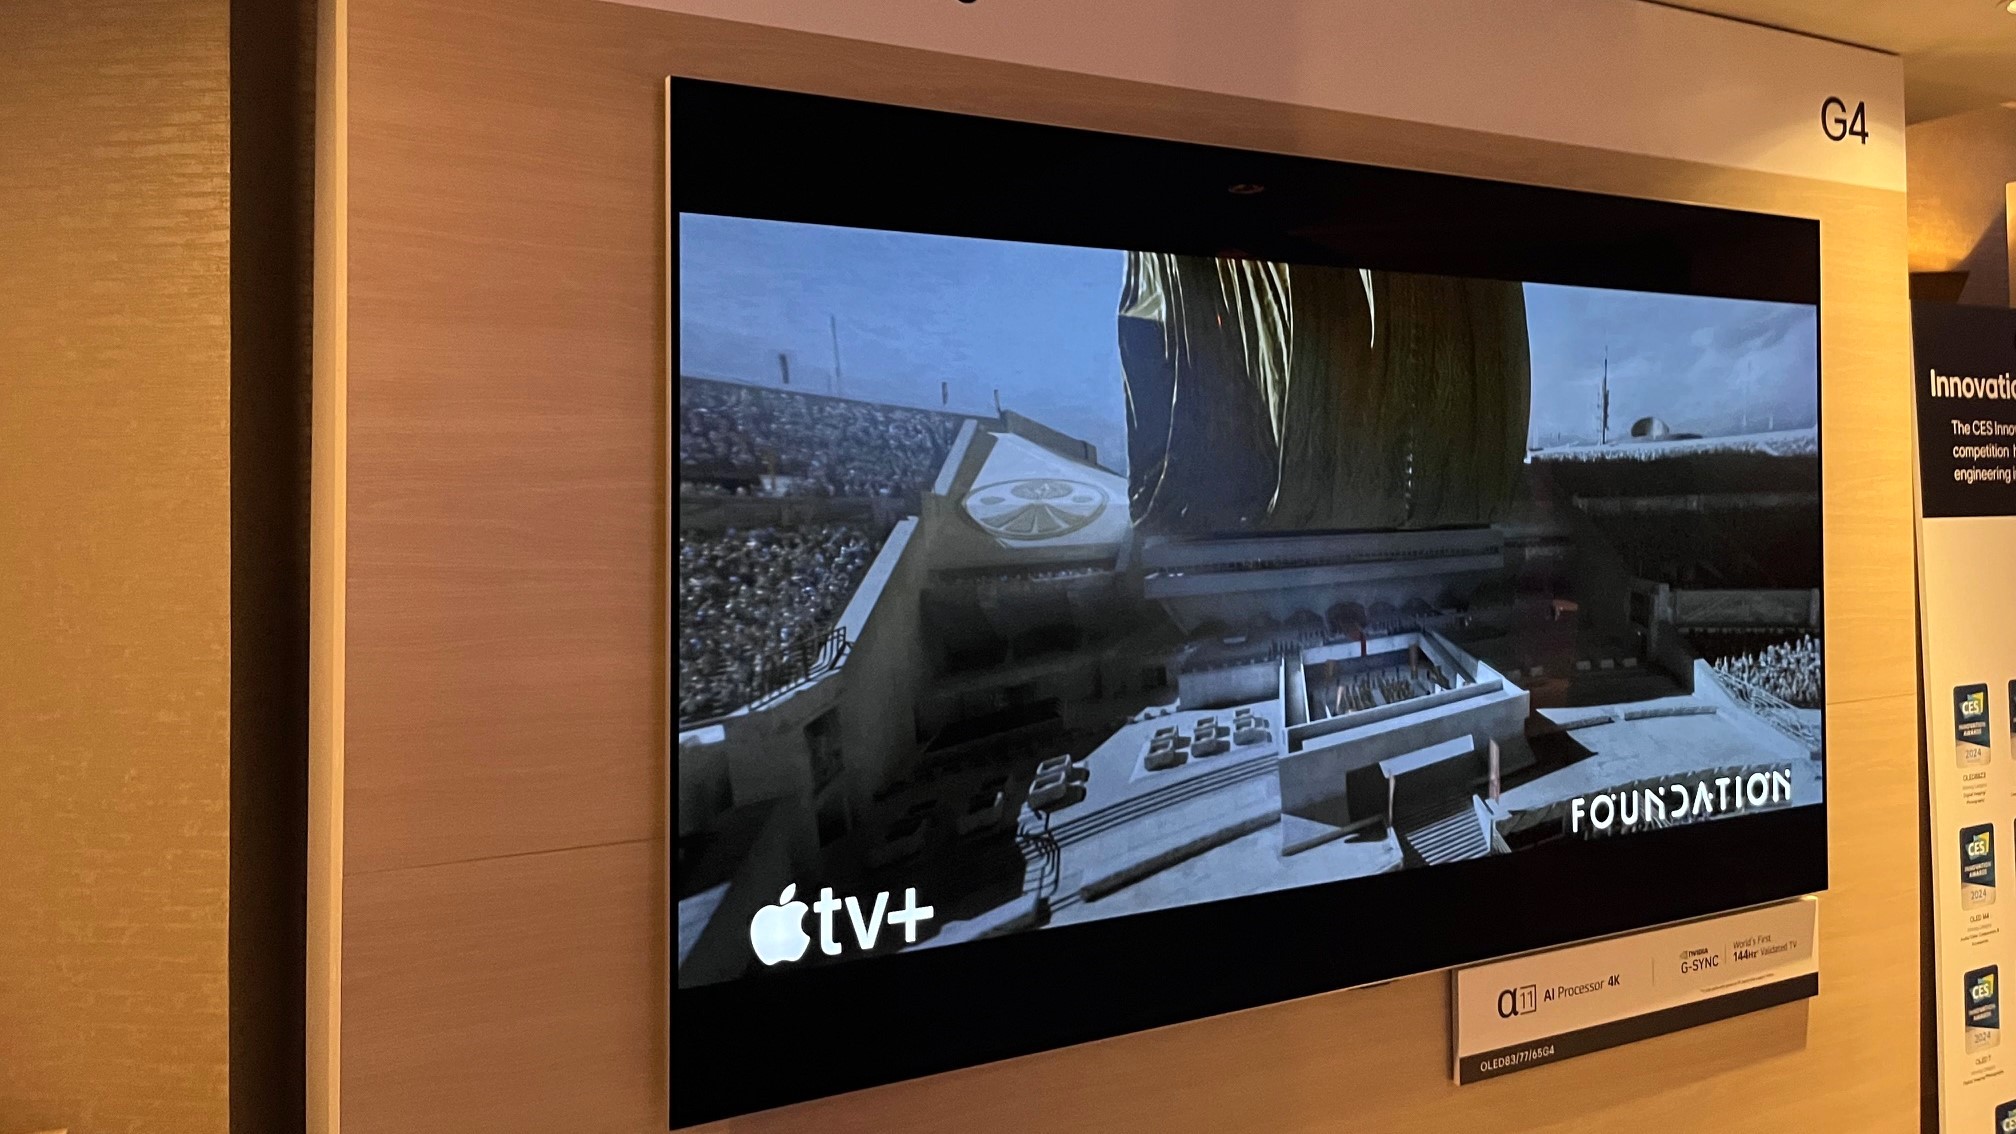 LG G4 OLED TV showing Foundation on Apple TV plus